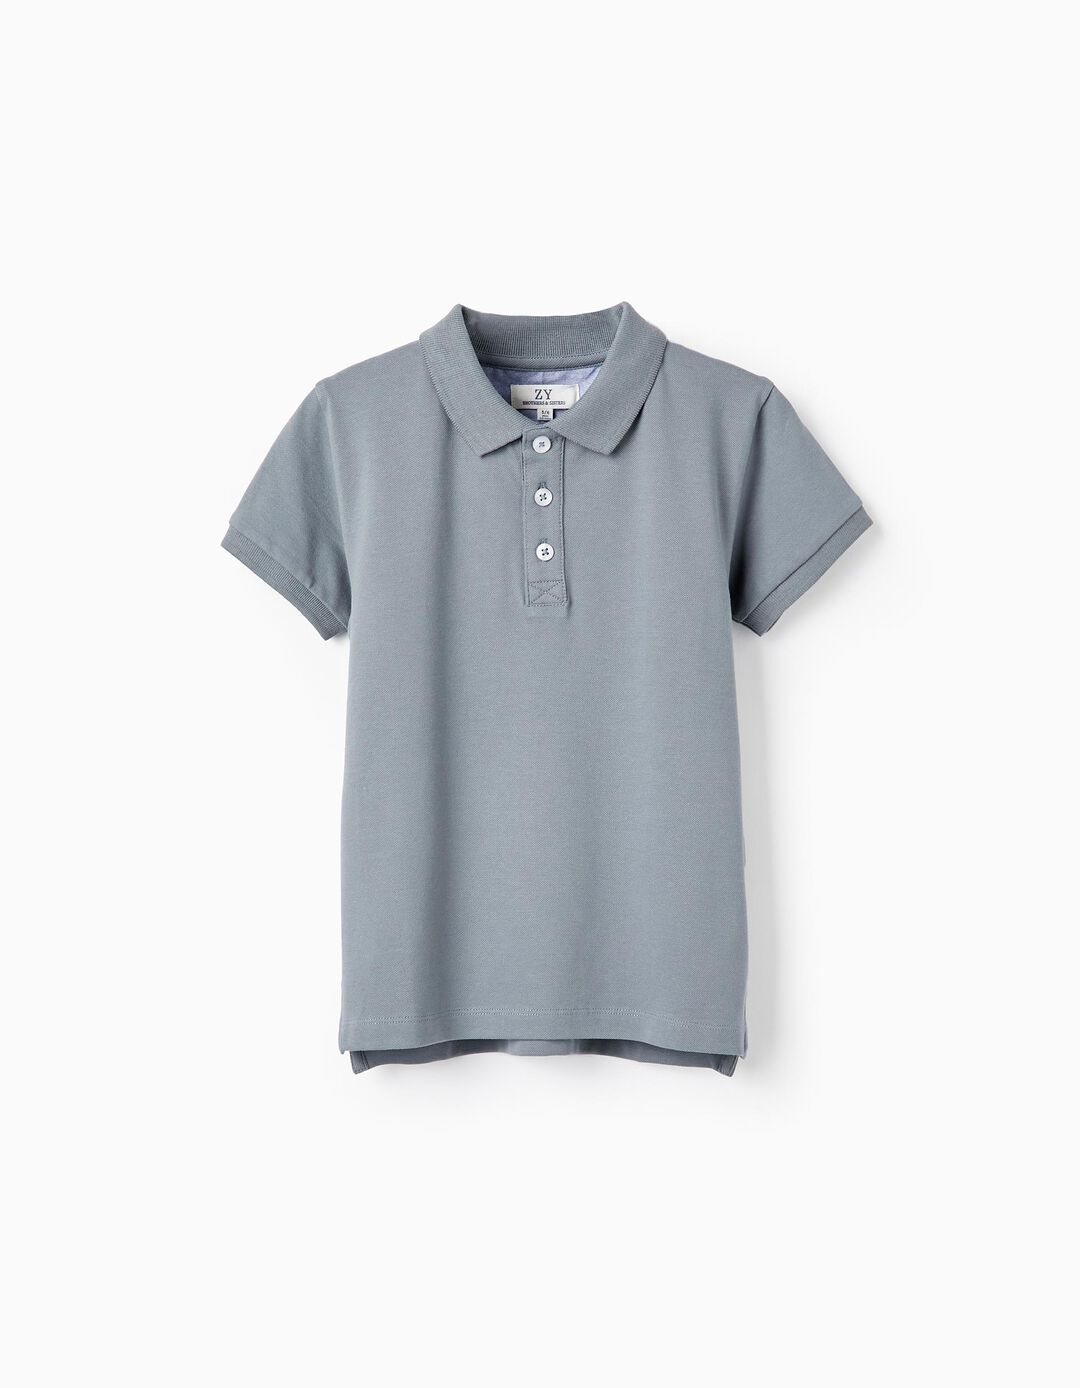 Short Sleeve Polo in Cotton Piqué for Boys 'B&S', Blue